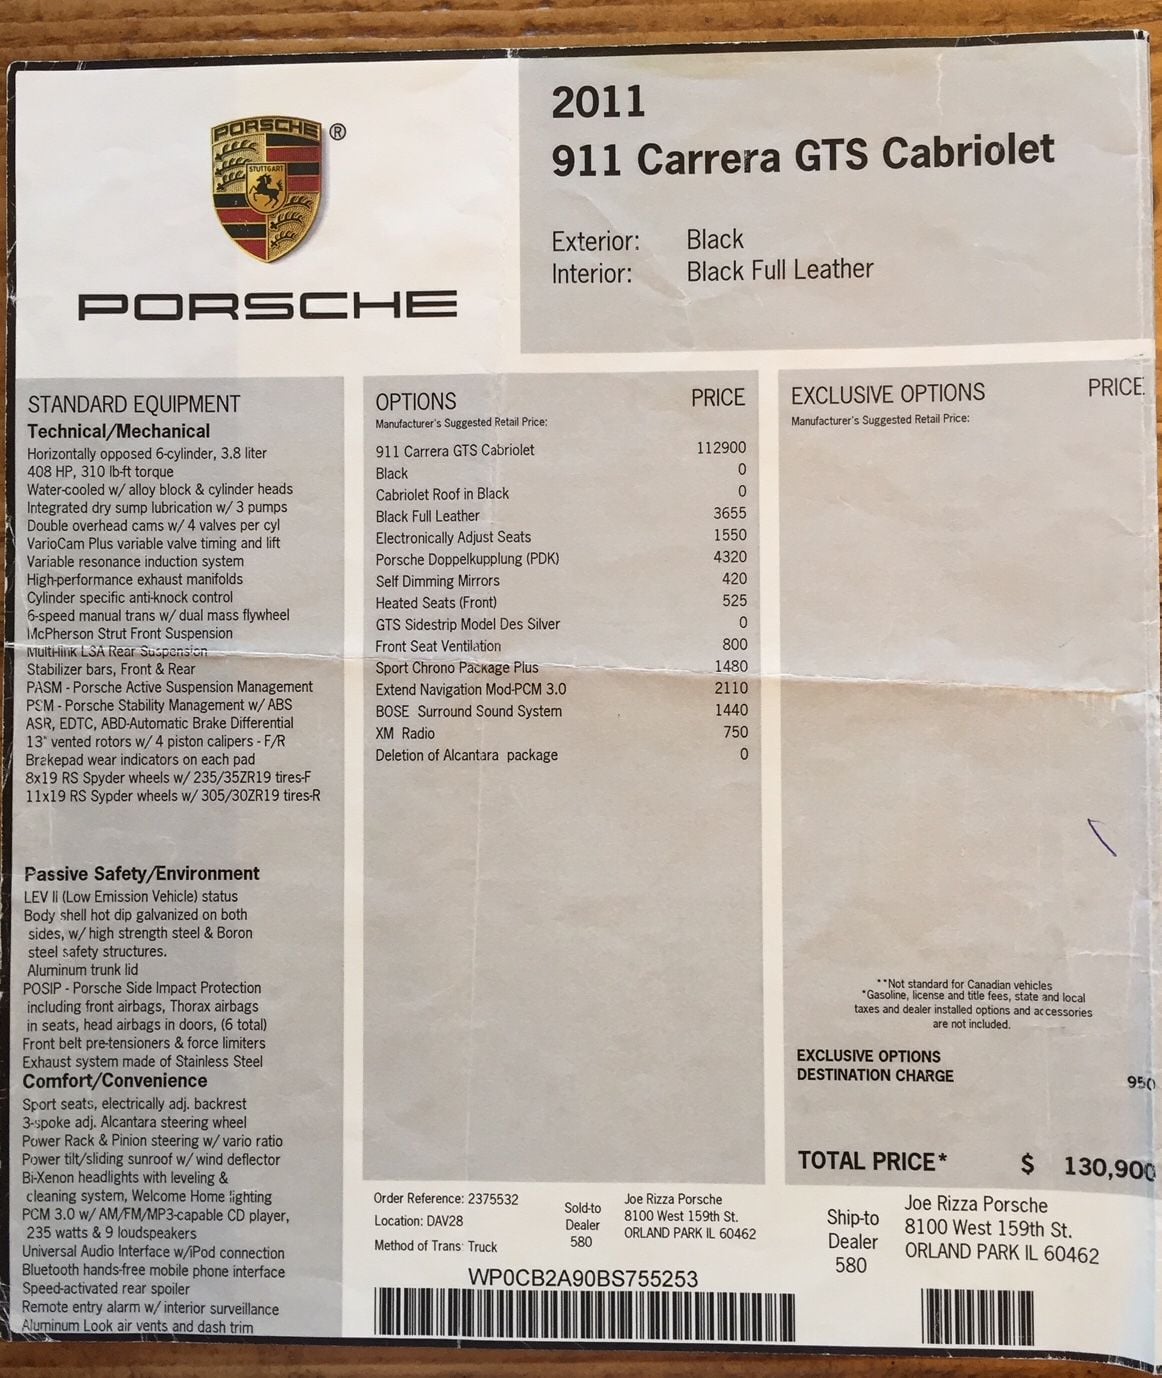 2011 Porsche 911 - 2011 Porsche 911 GTS Cabriolet - Used - VIN WP0CB2A90BS755253 - 14,400 Miles - 6 cyl - 2WD - Automatic - Convertible - Black - Diablo, CA 94528, United States